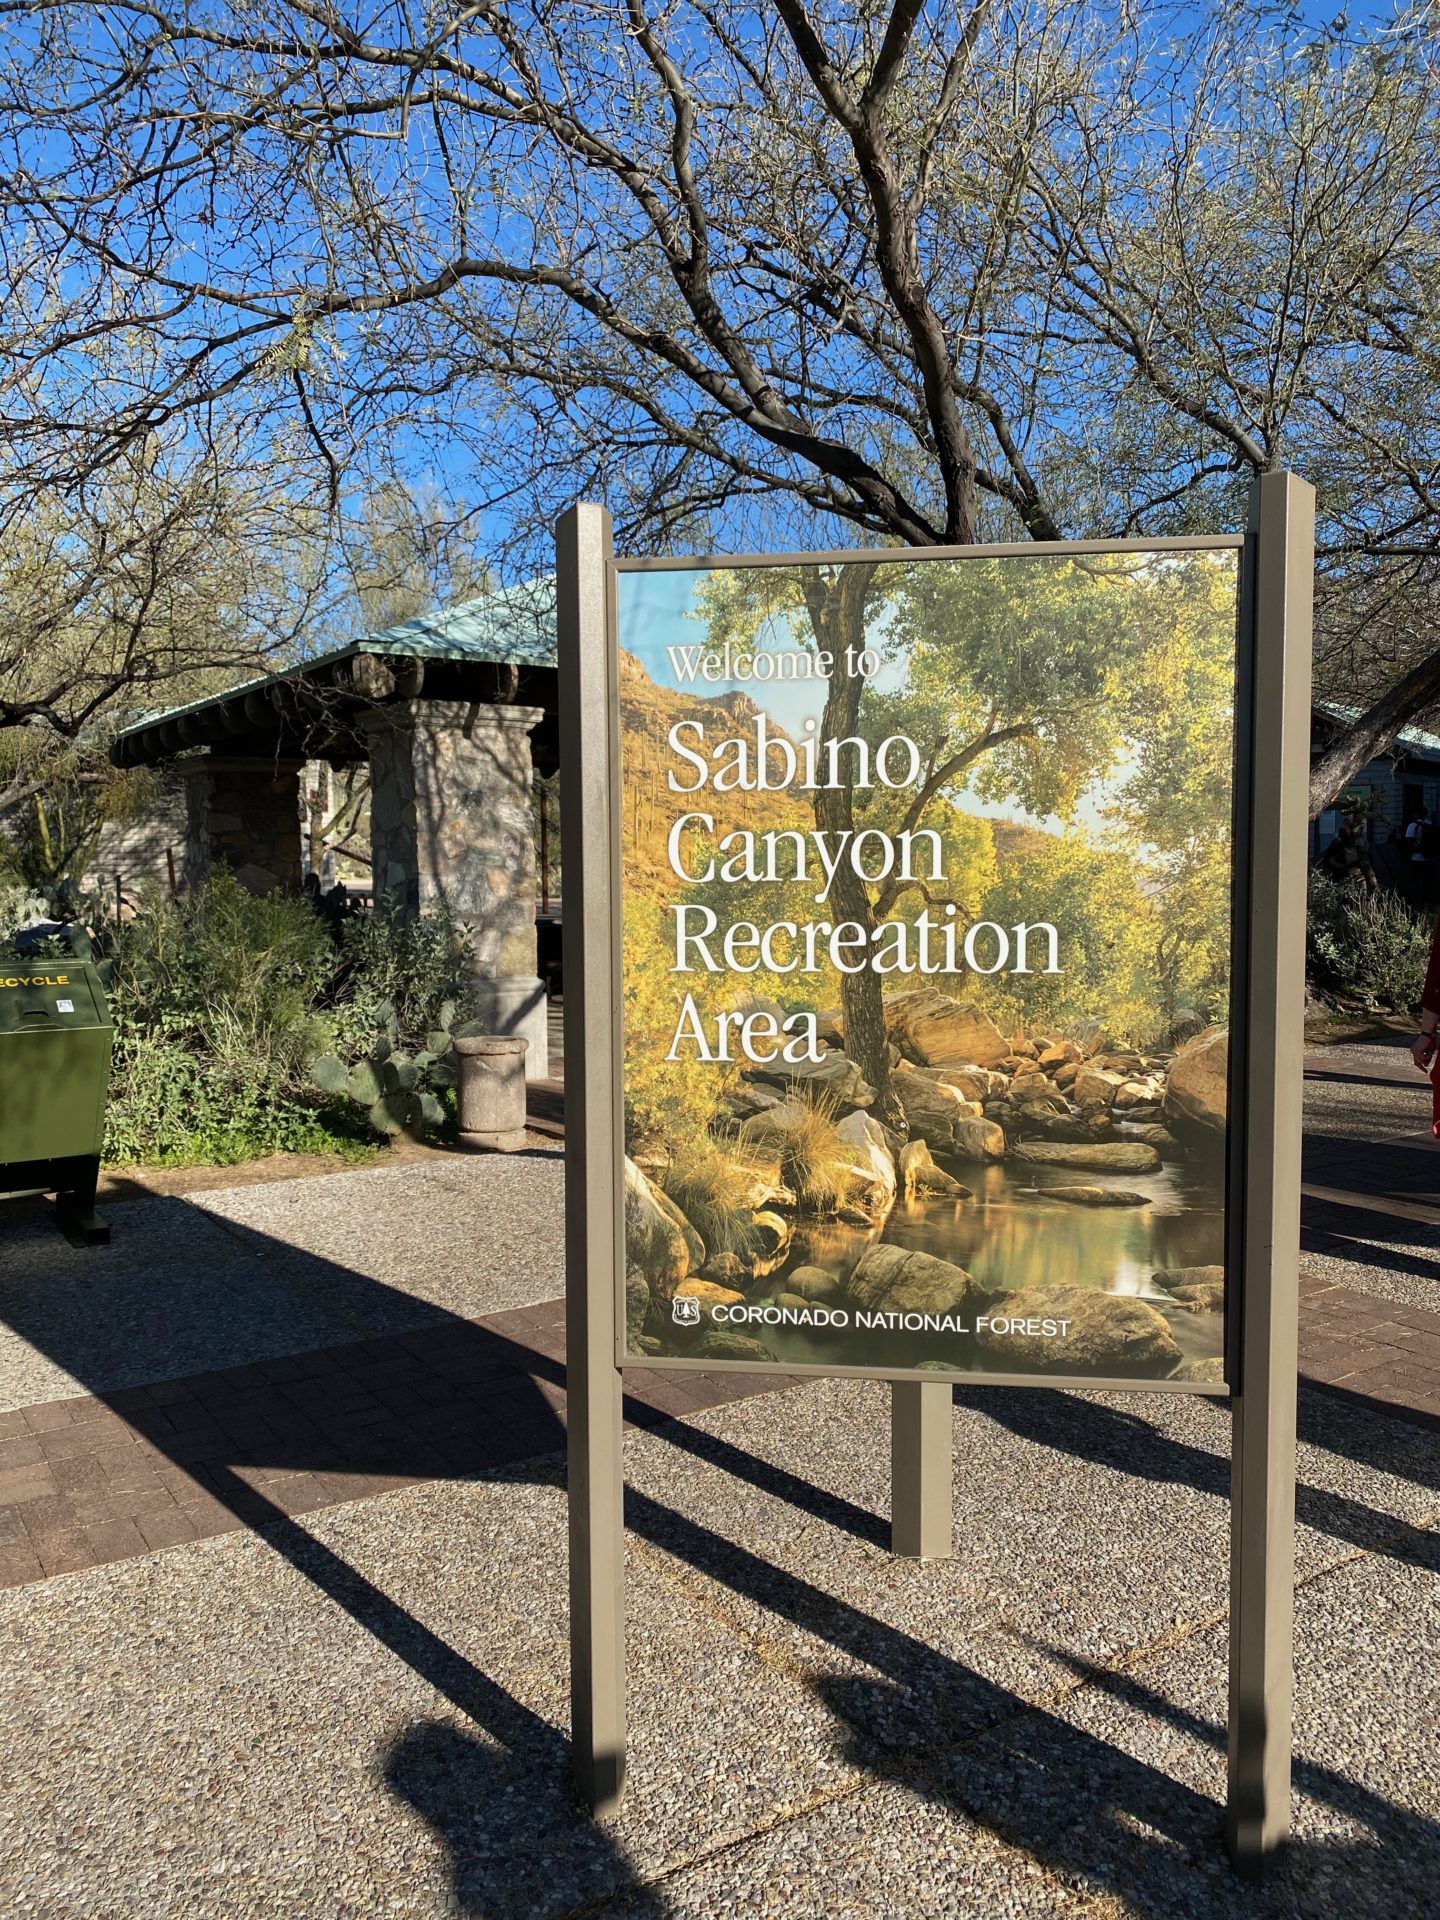 Sabino Canyon Recreation Area in Tucson, Arizona